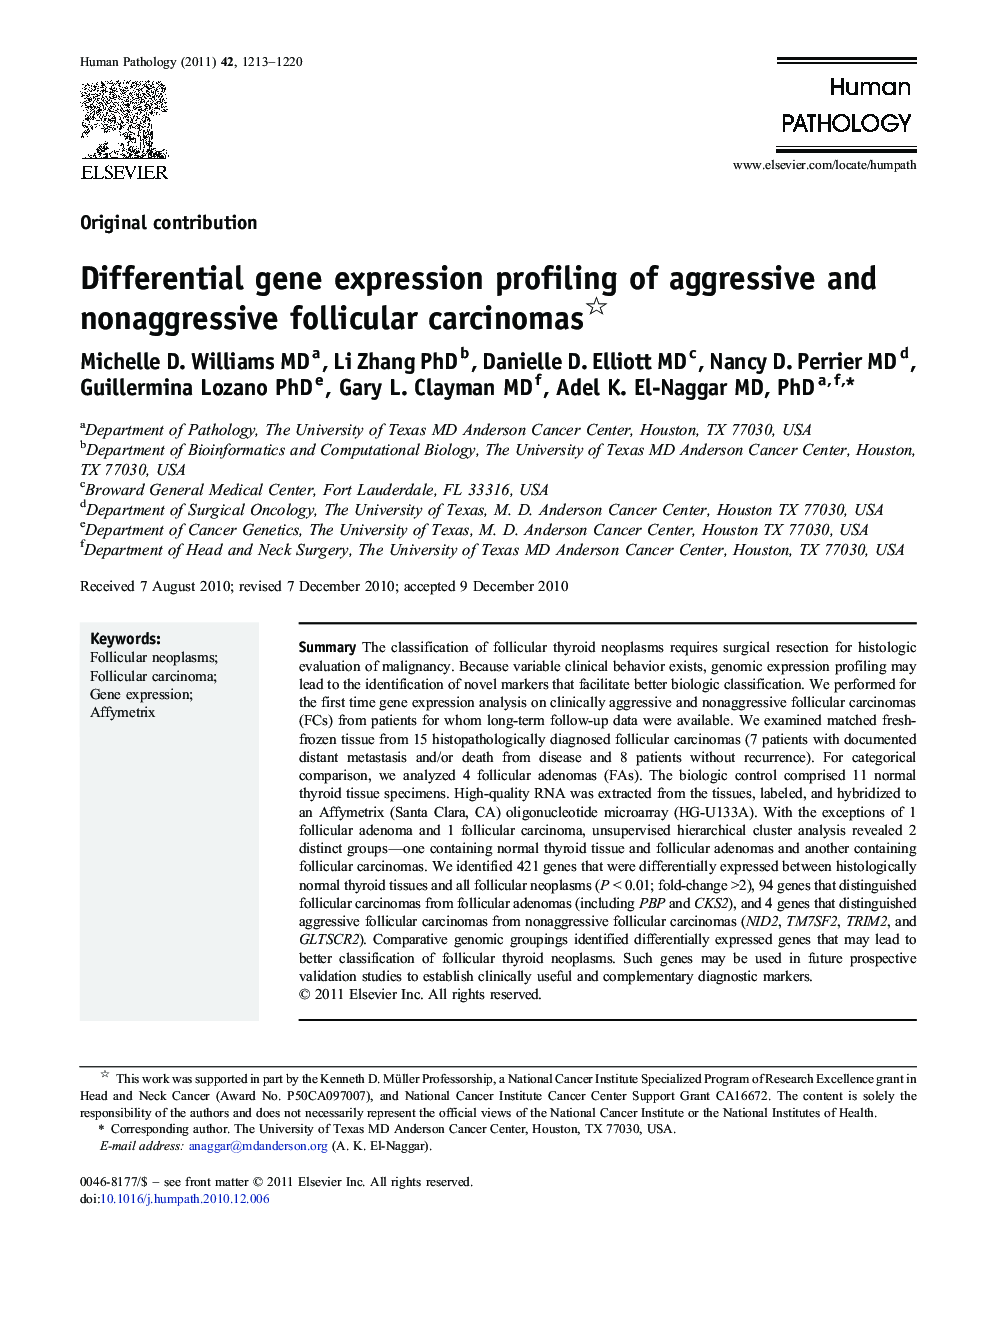 Differential gene expression profiling of aggressive and nonaggressive follicular carcinomas 